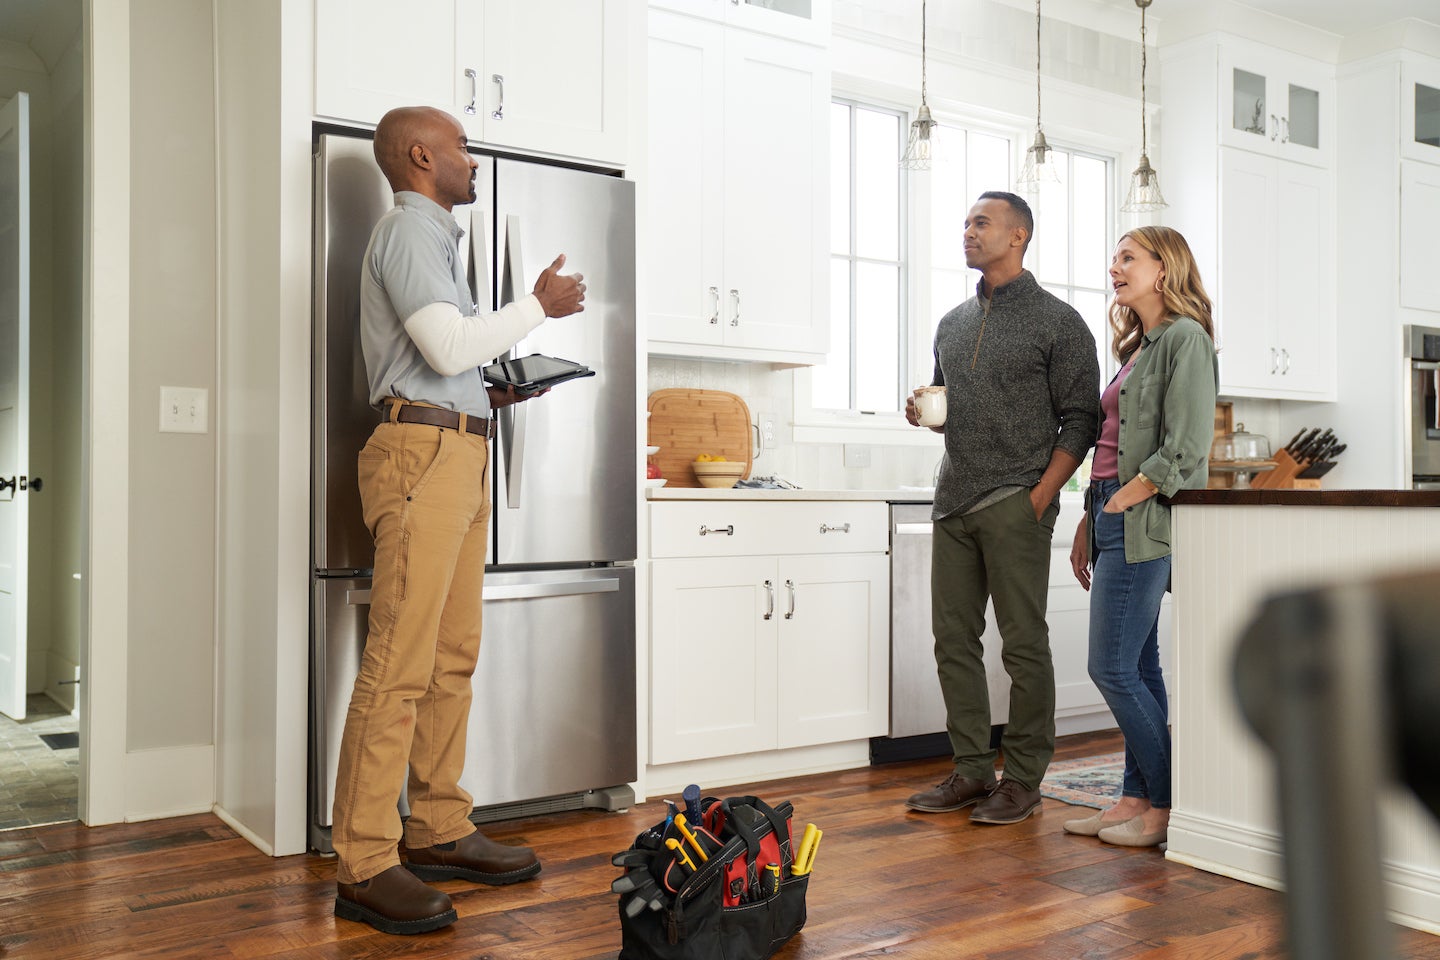 Repairman reviews refrigerator repairs with Baltimore couple.